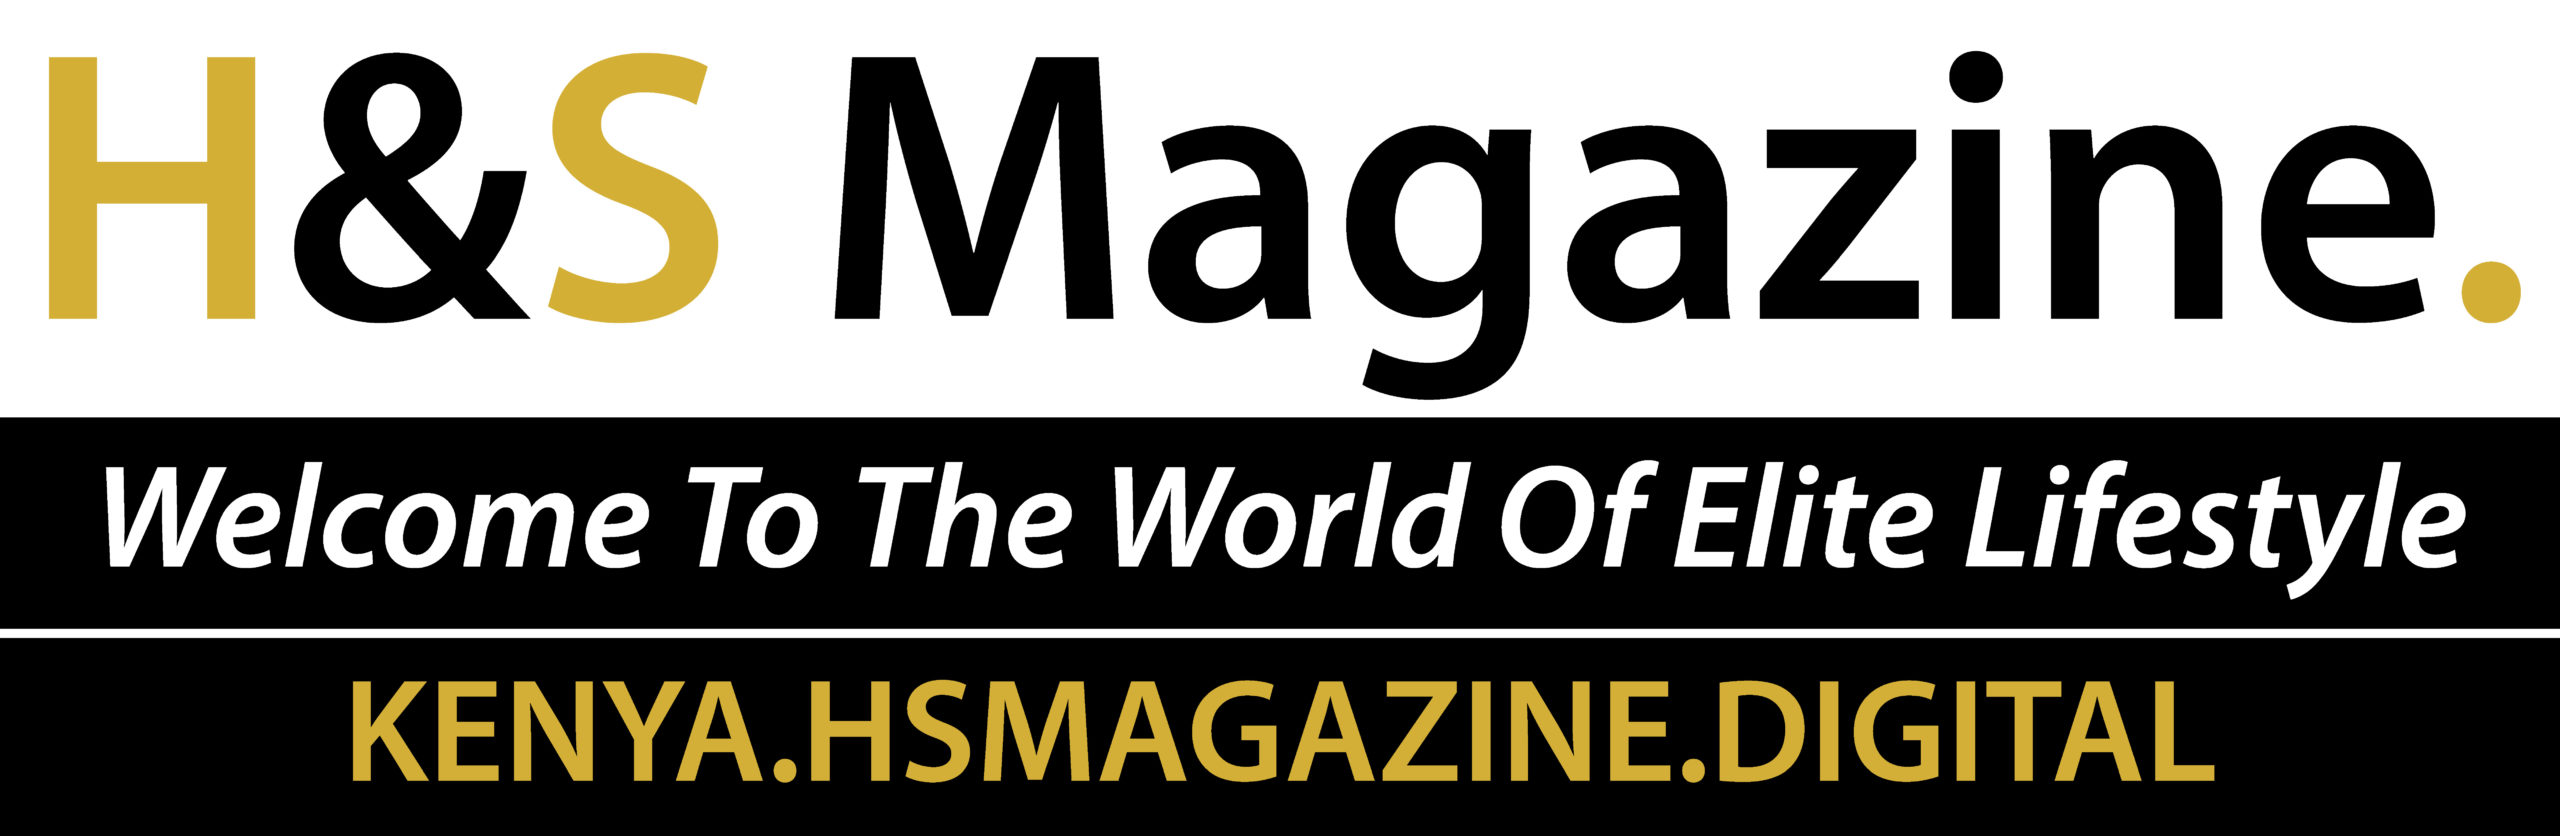 H&S Magazine Kenya Logo